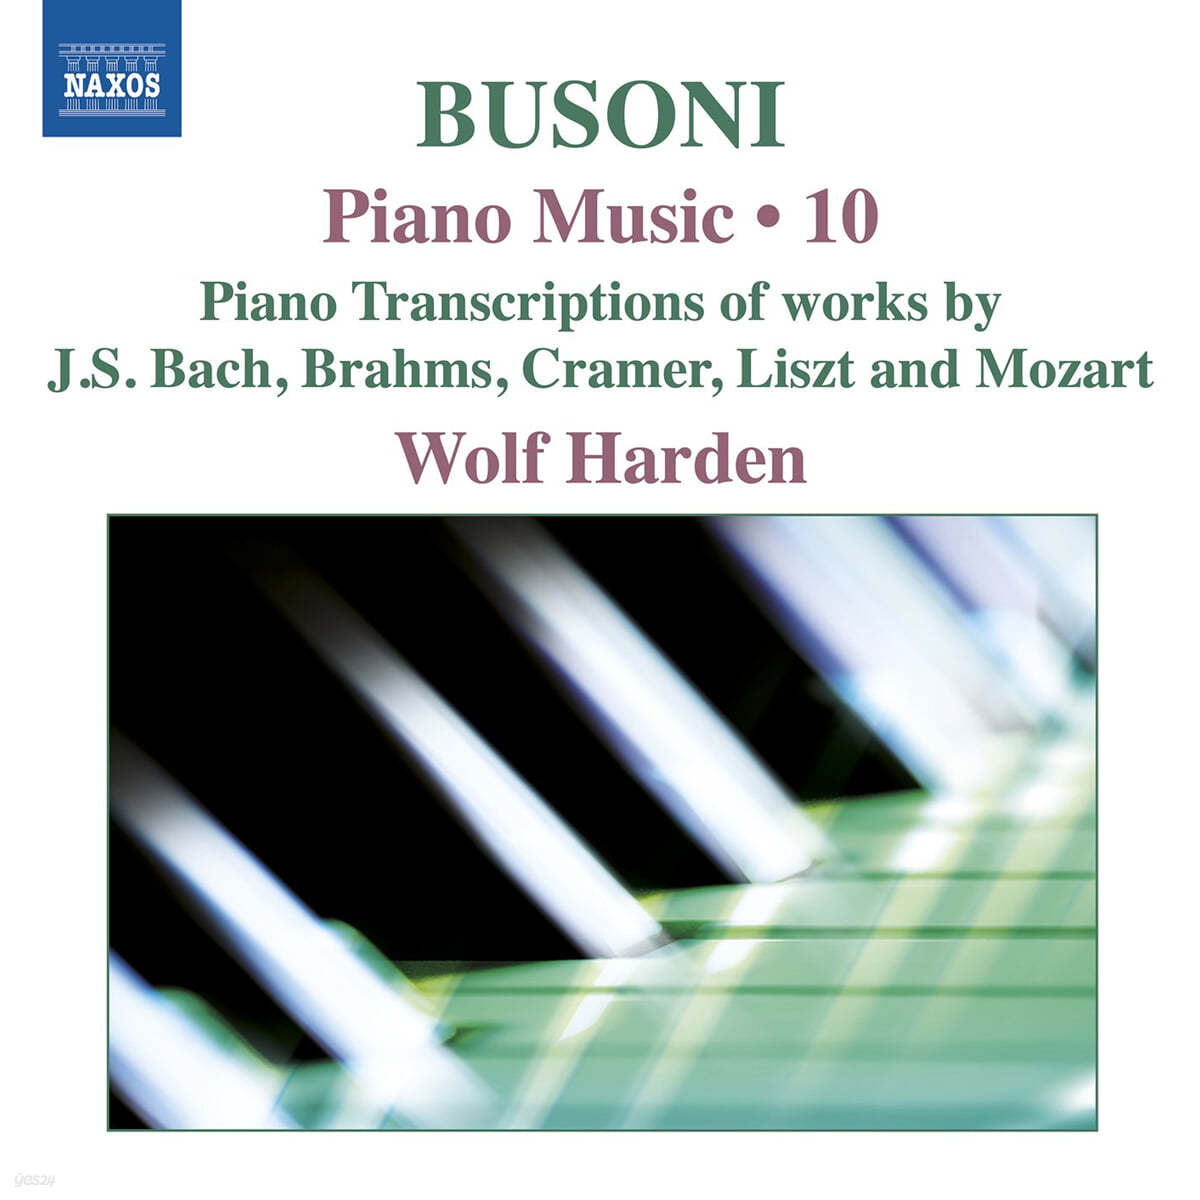 Wolf Harden 부조니: 피아노 작품 10집 (Busoni: Works for Piano Vol. 10) 